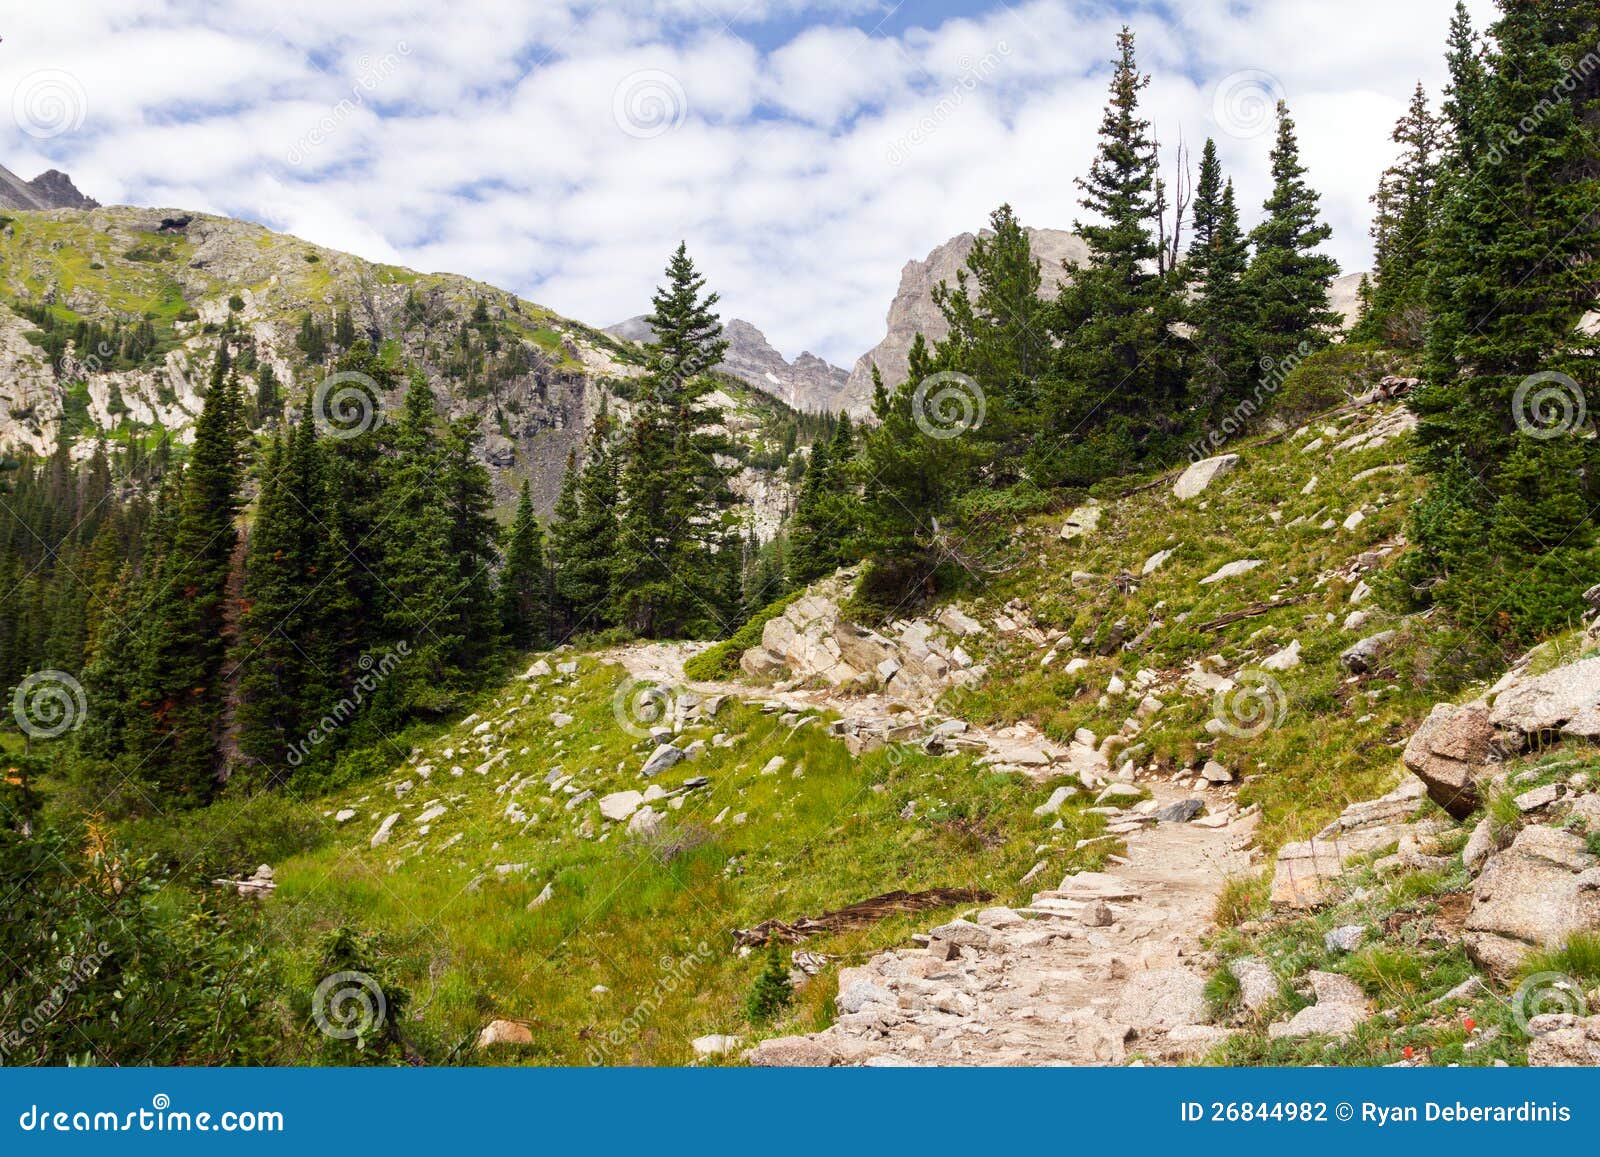 hiking trail through the colorado rocky mountains